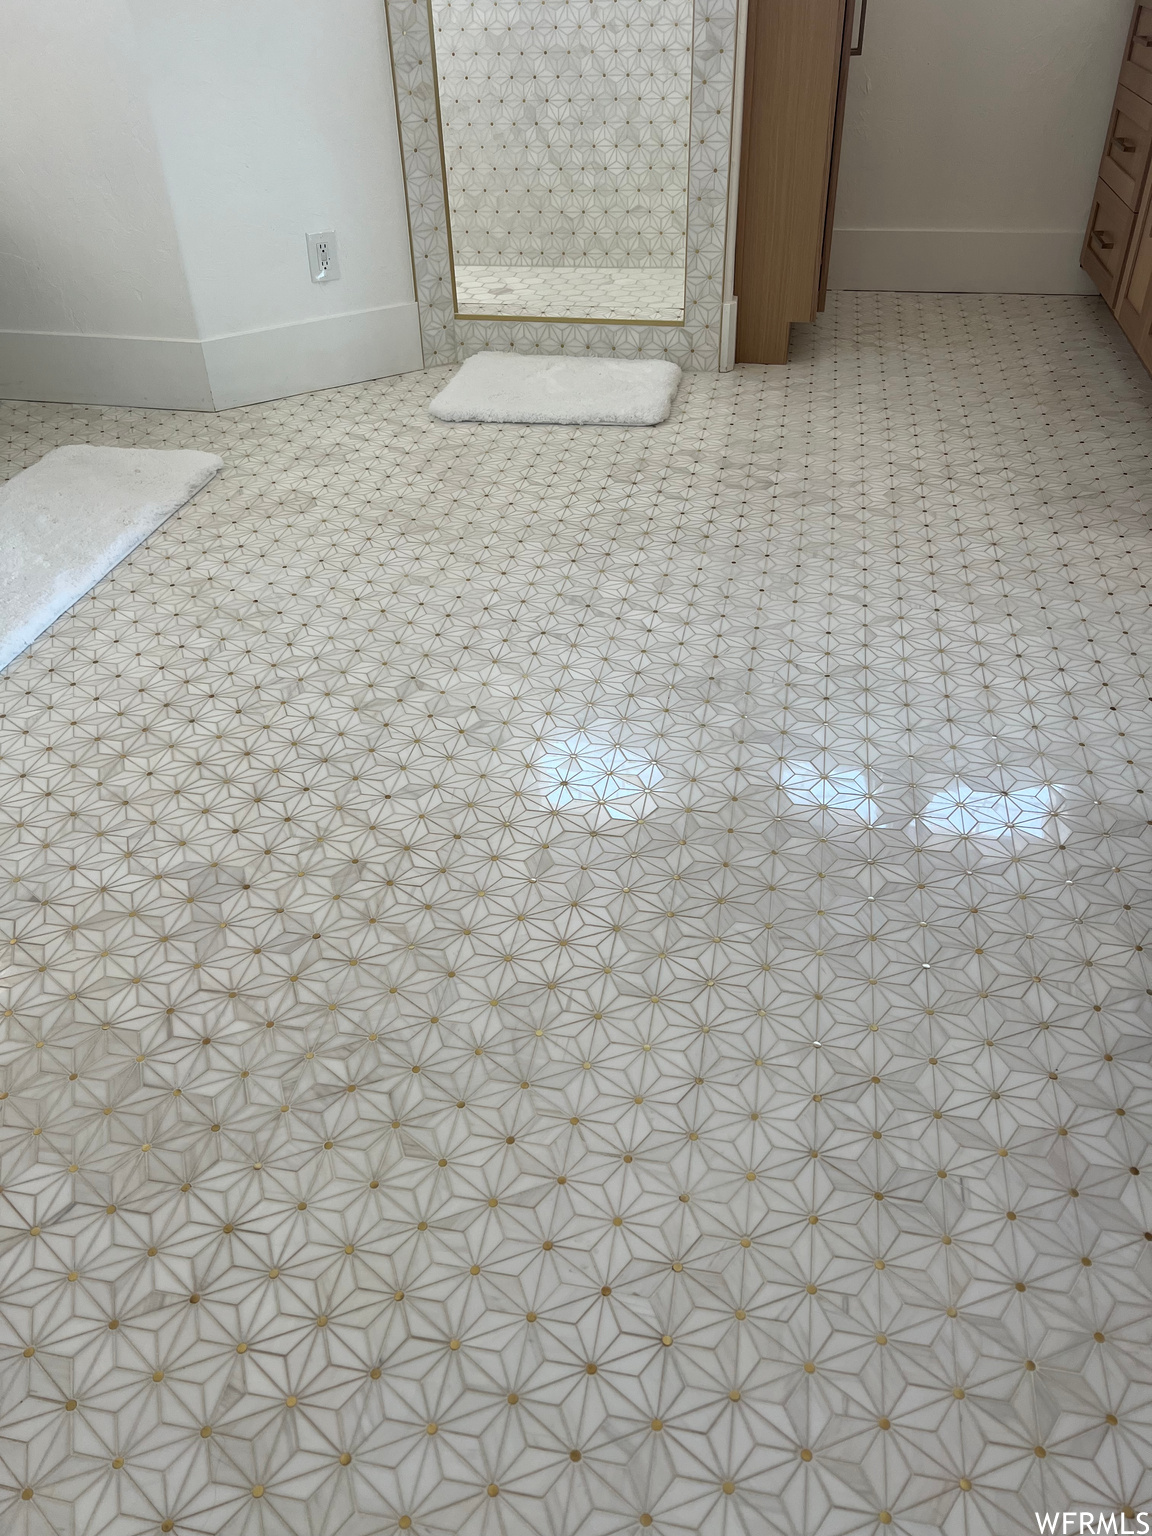 Room details featuring light tile floors